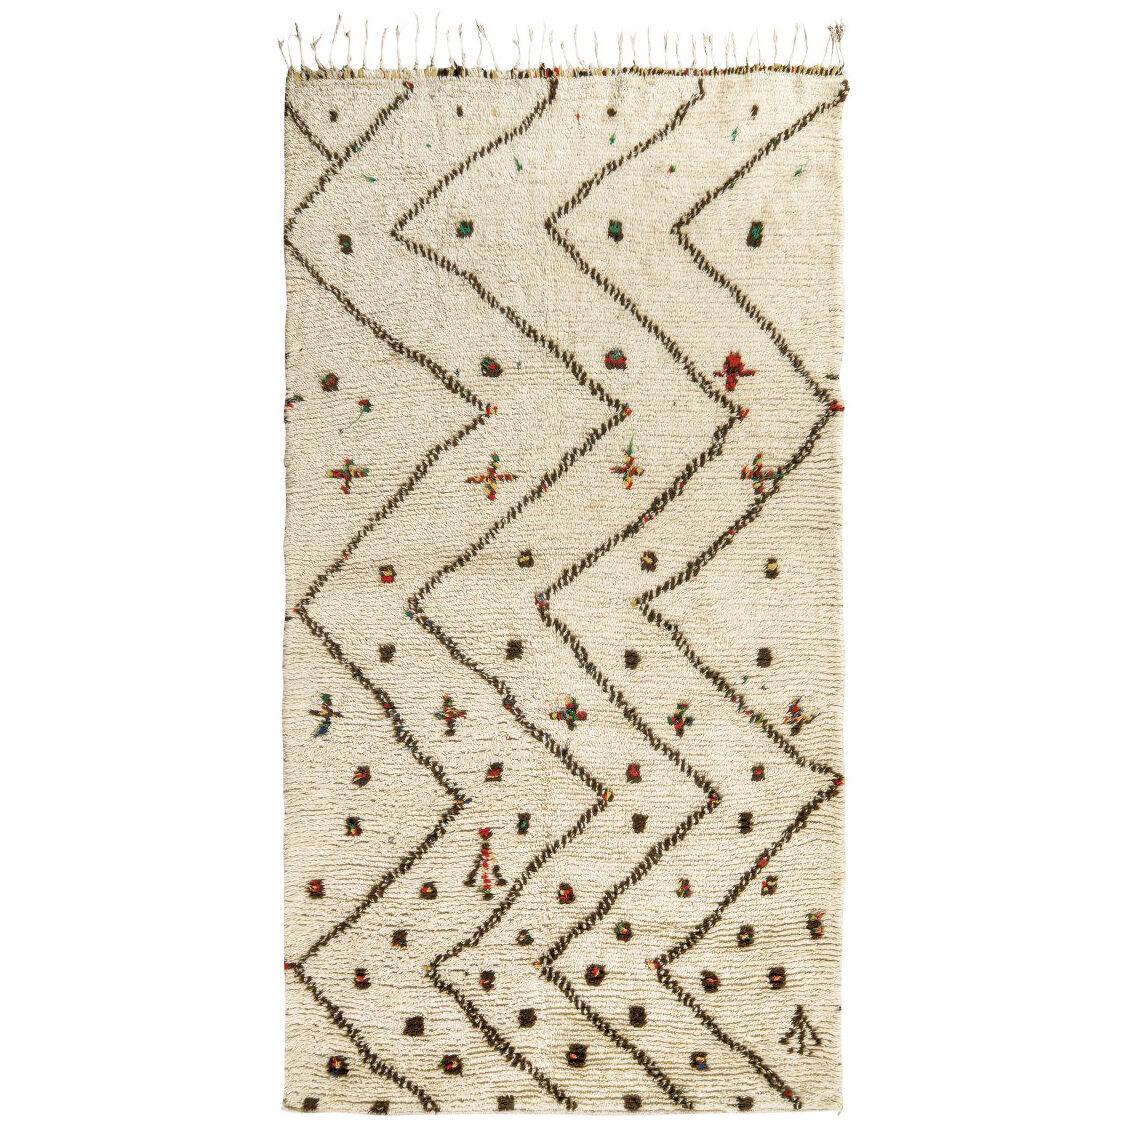 Hand-Knotted Moroccan Berber Rug, Beige-Brown Chevron Zig-Zag Pattern